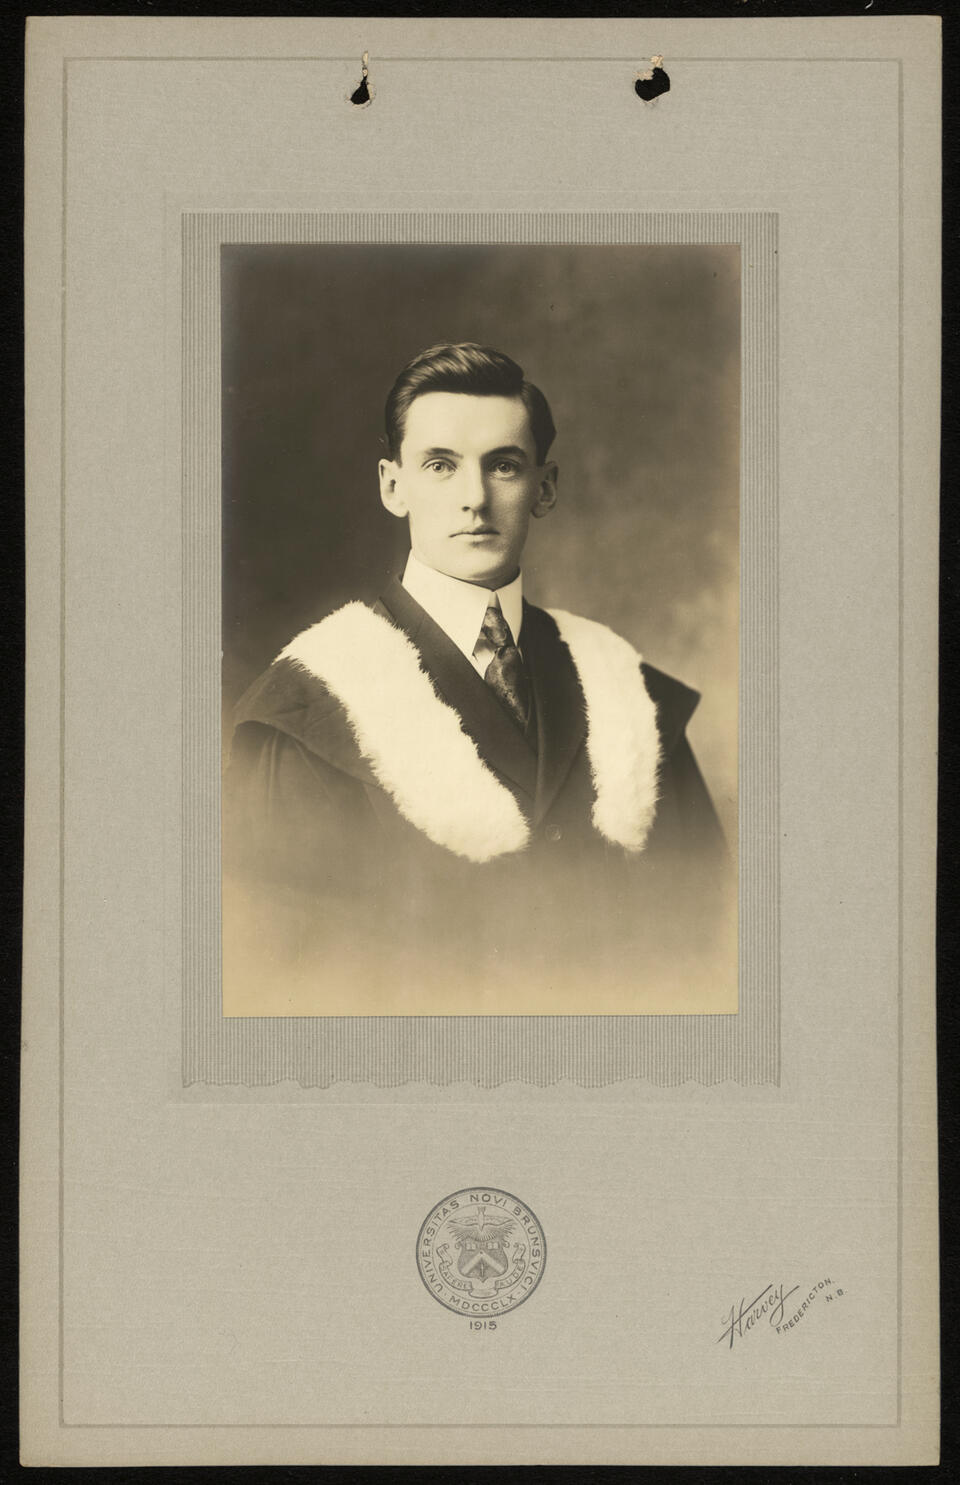 1915 Joseph Edward Daley